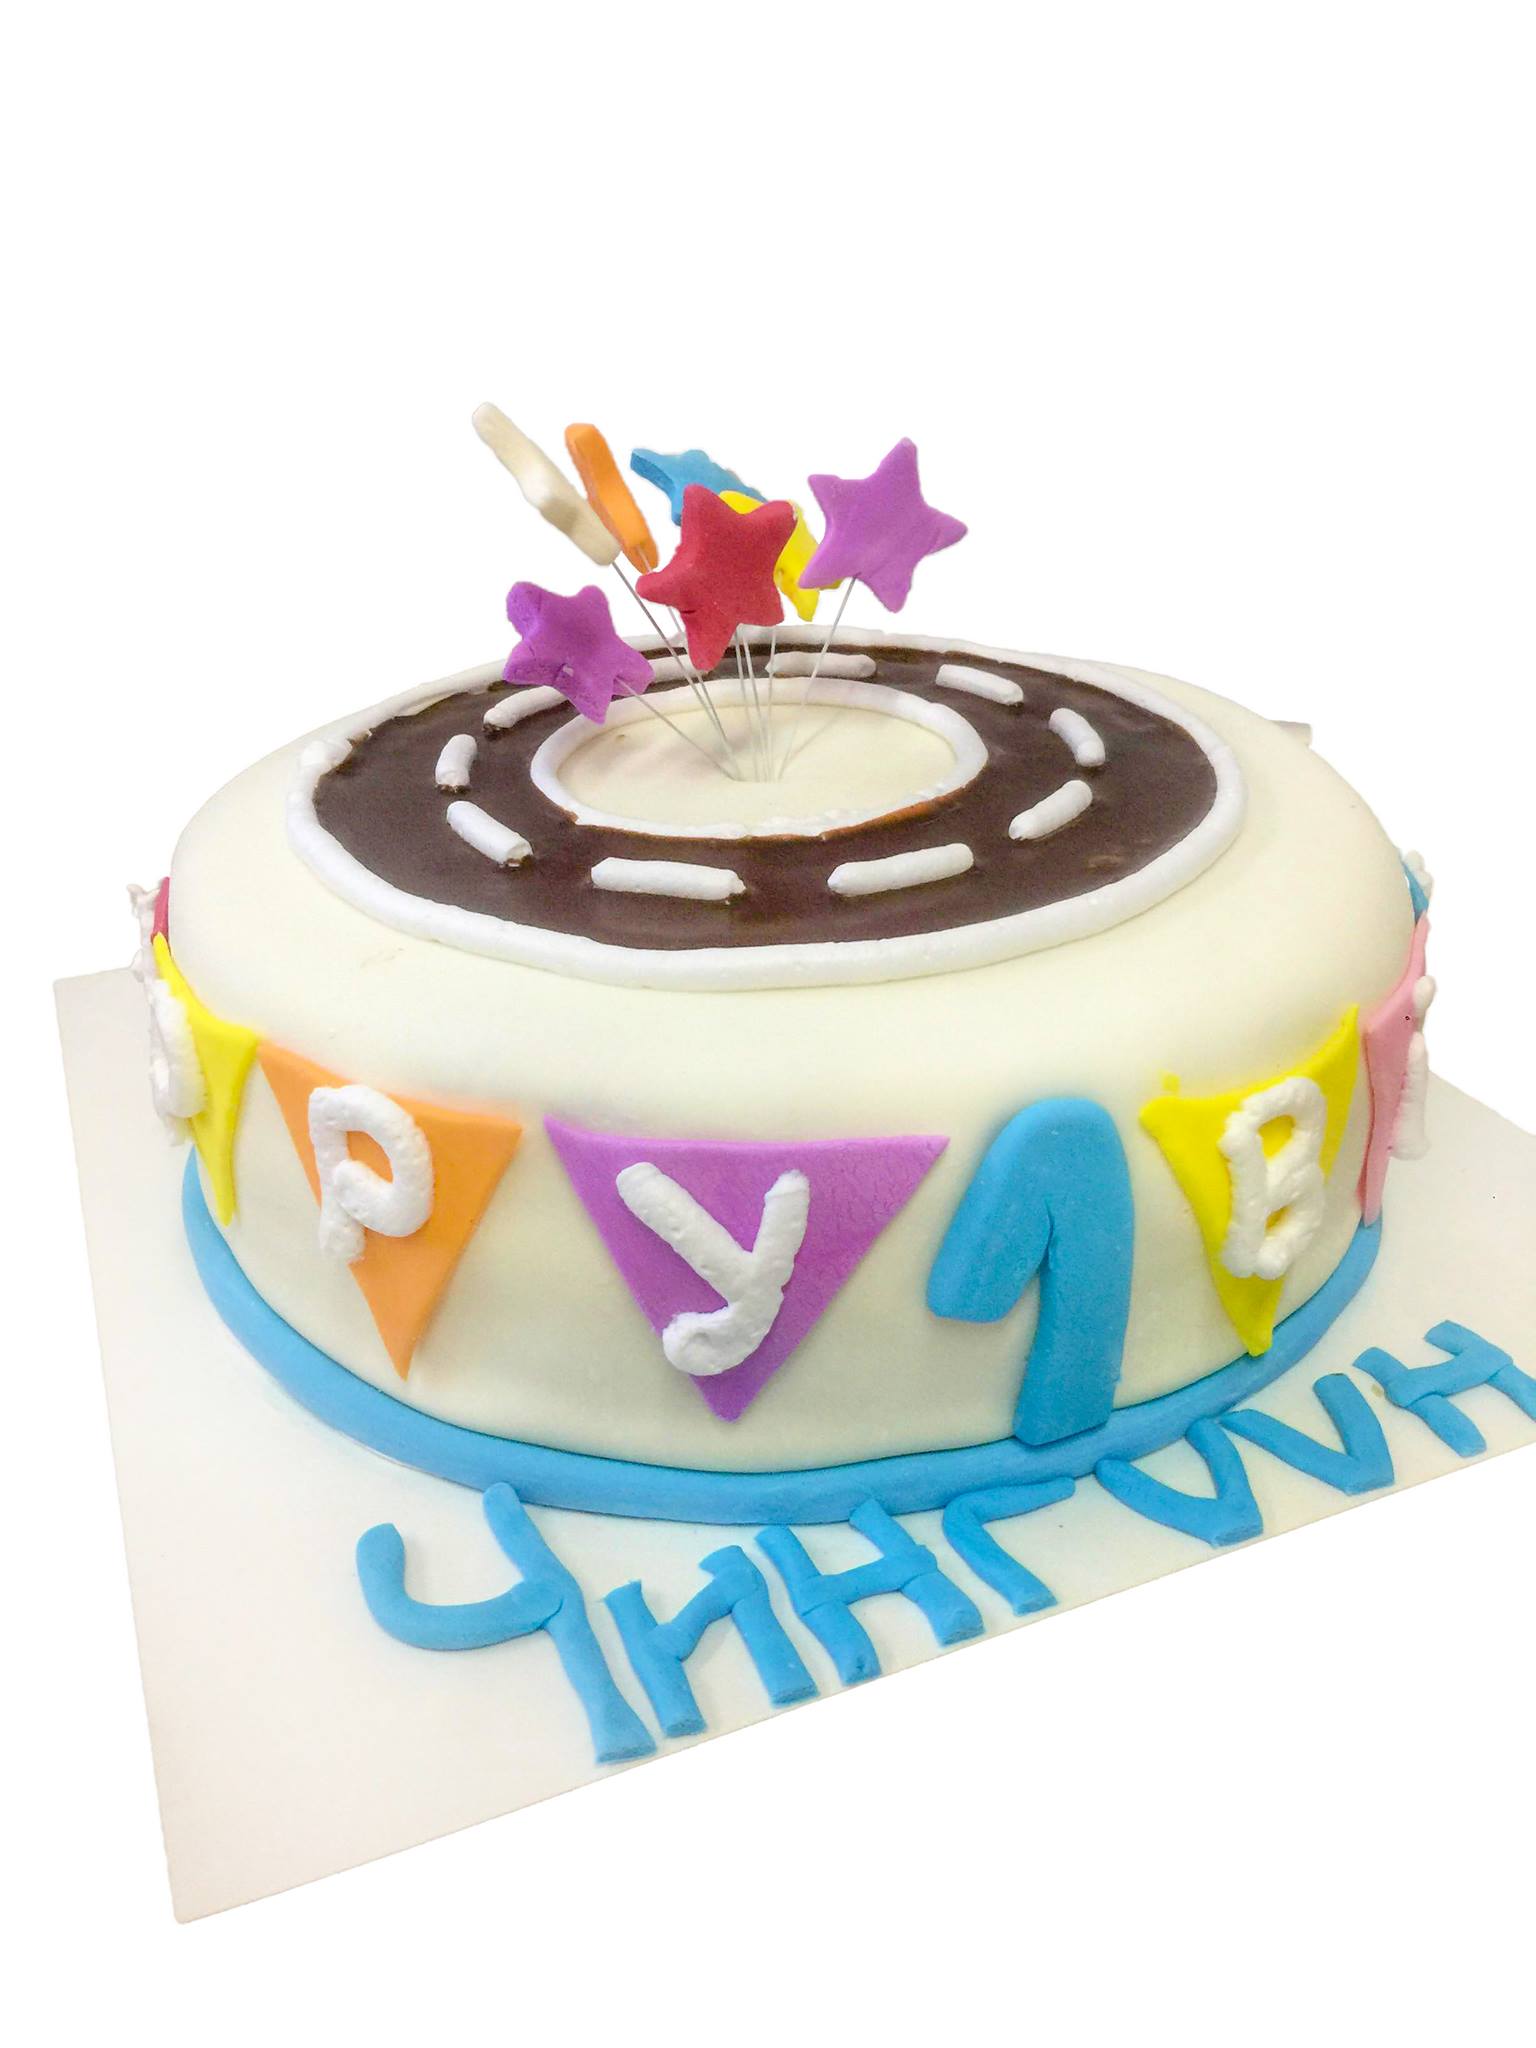 Fondant Birthday 1 year old cake2